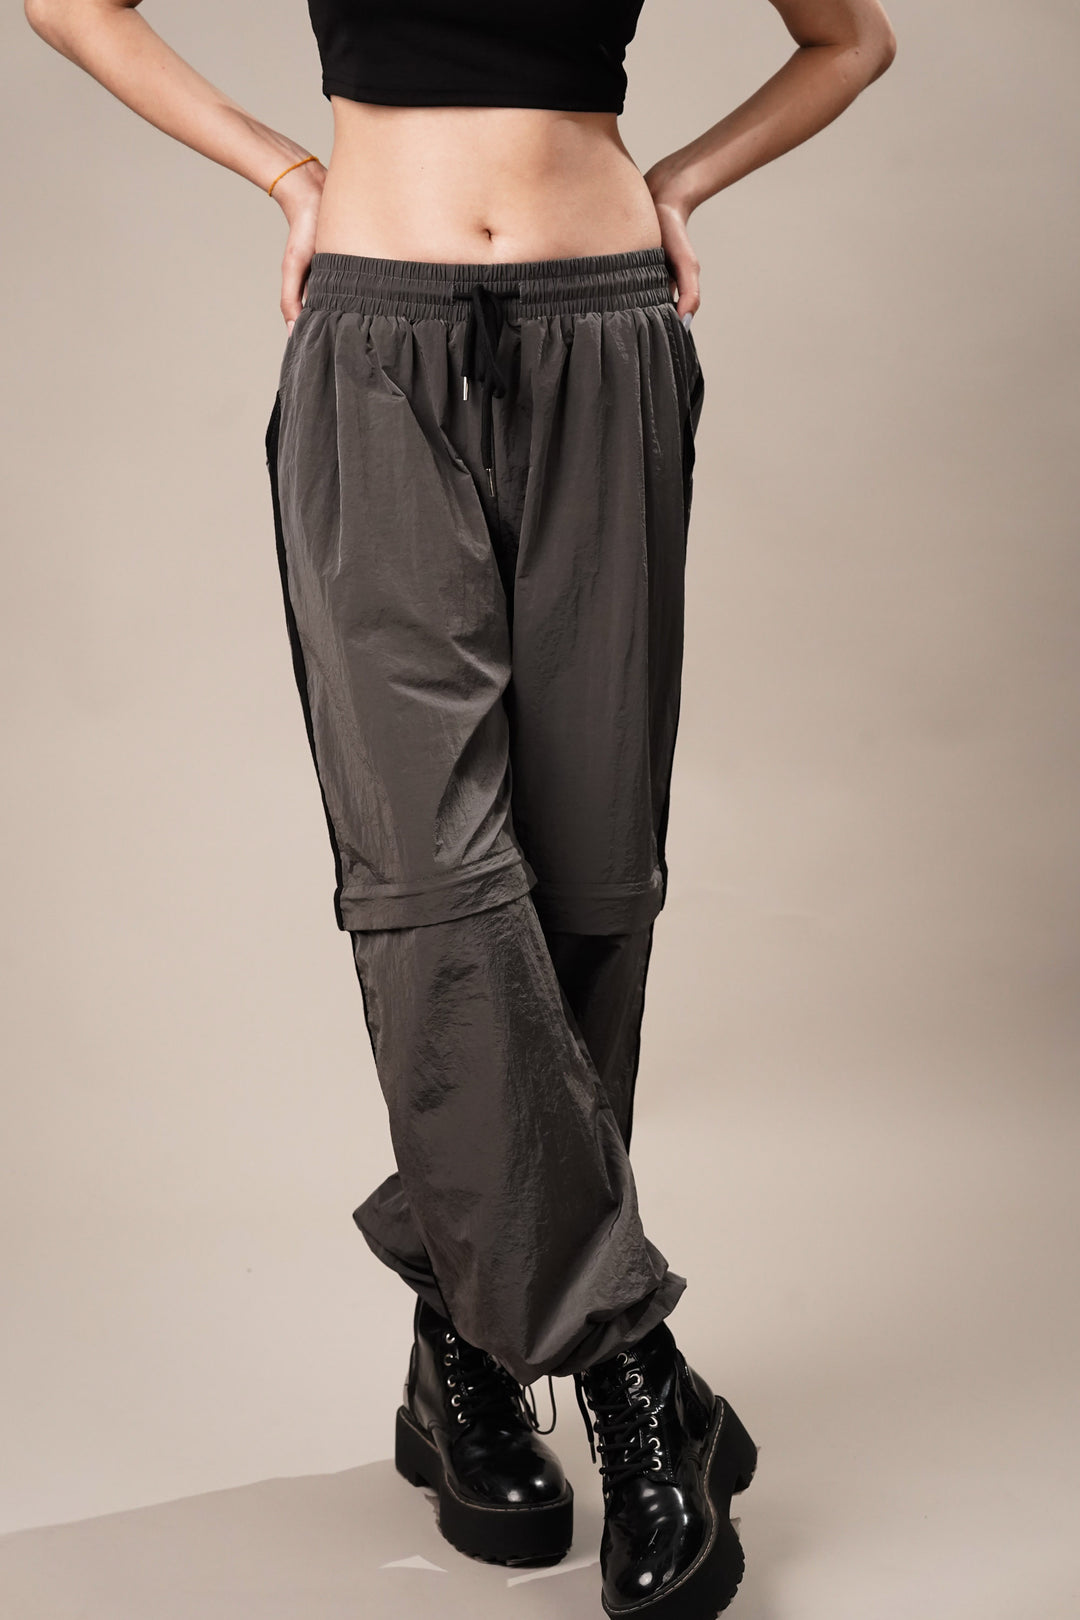 dark grey casual pants for regular wear